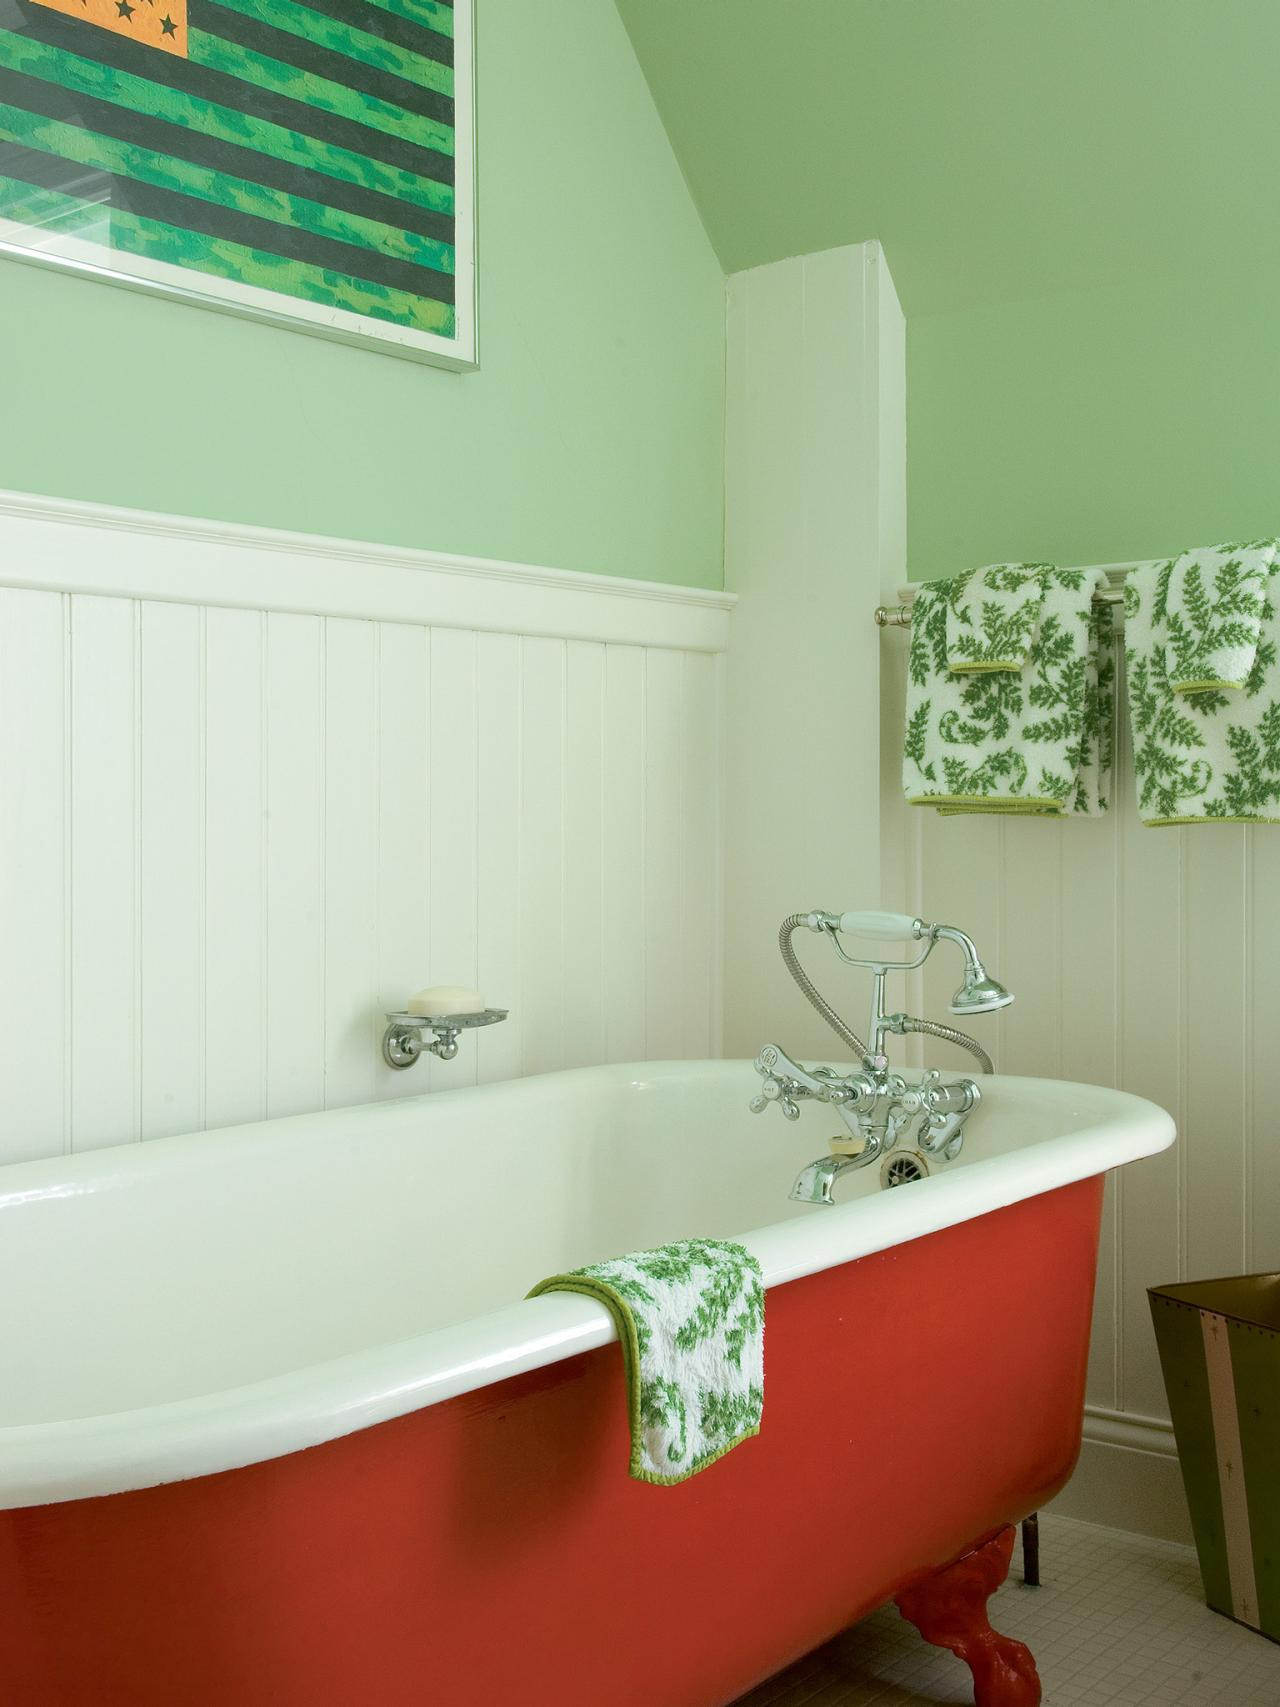 Small Bathroom Designs With Tub
 Add Glamour With Small Vintage Bathroom Ideas